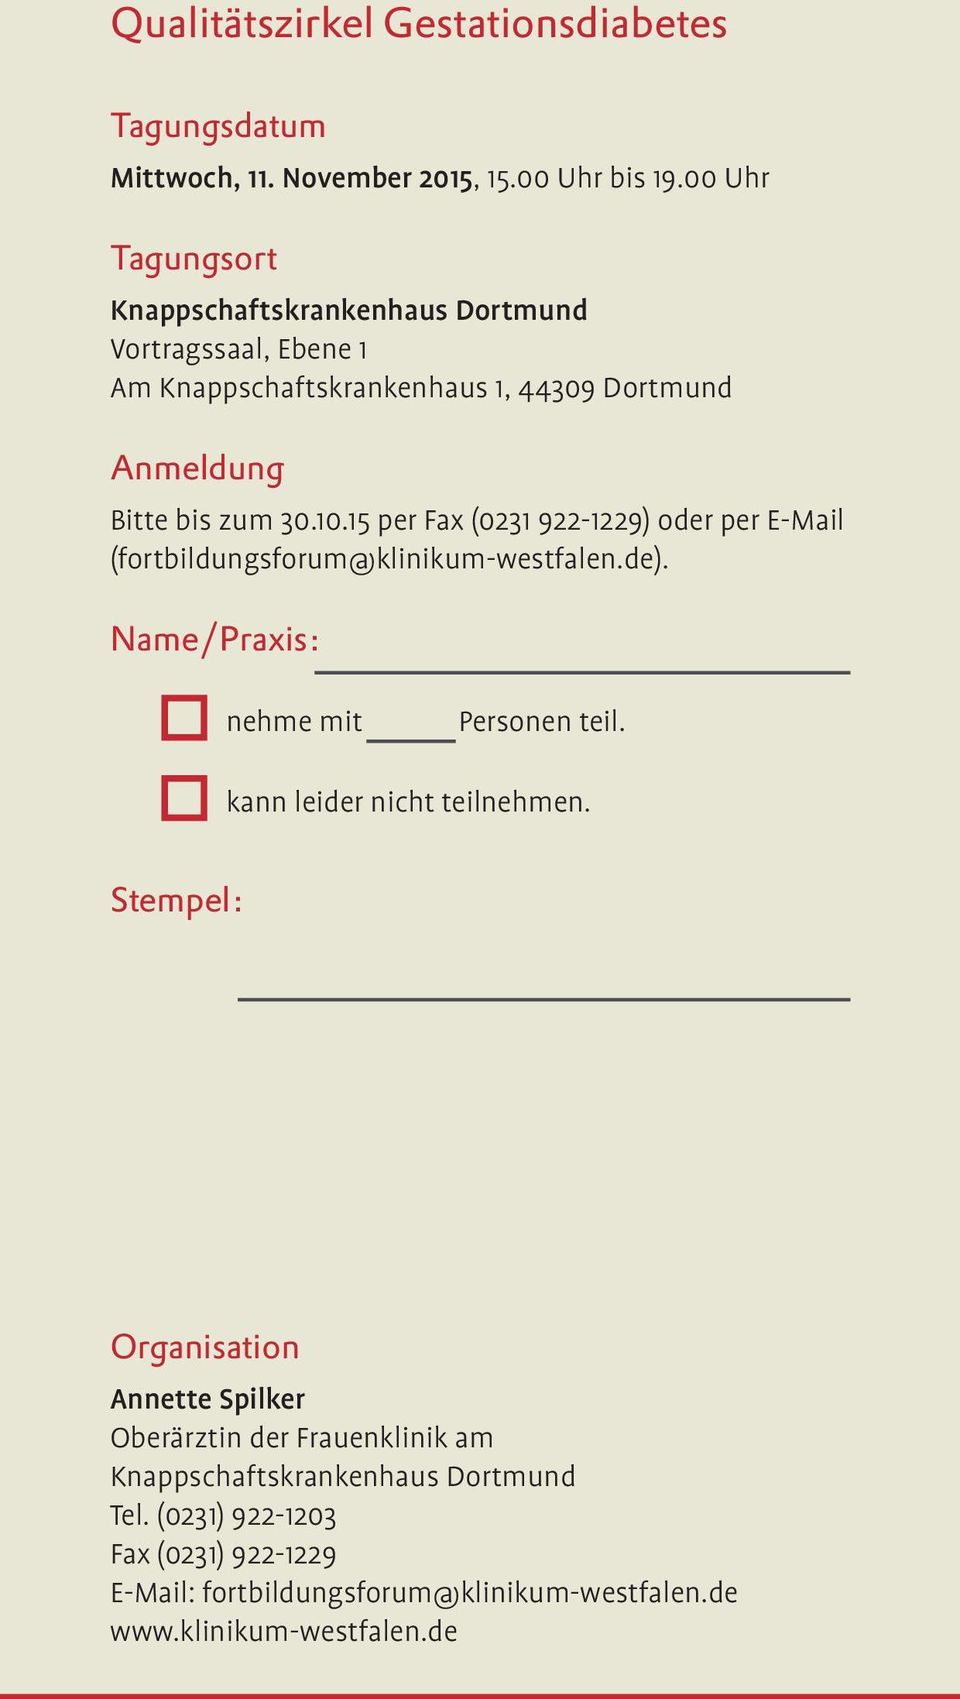 15 per Fax (0231 922-1229) oder per E-Mail (fortbildungsforum@klinikum-westfalen.de). Name/Praxis: nehme mit Personen teil. kann leider nicht teilnehmen.